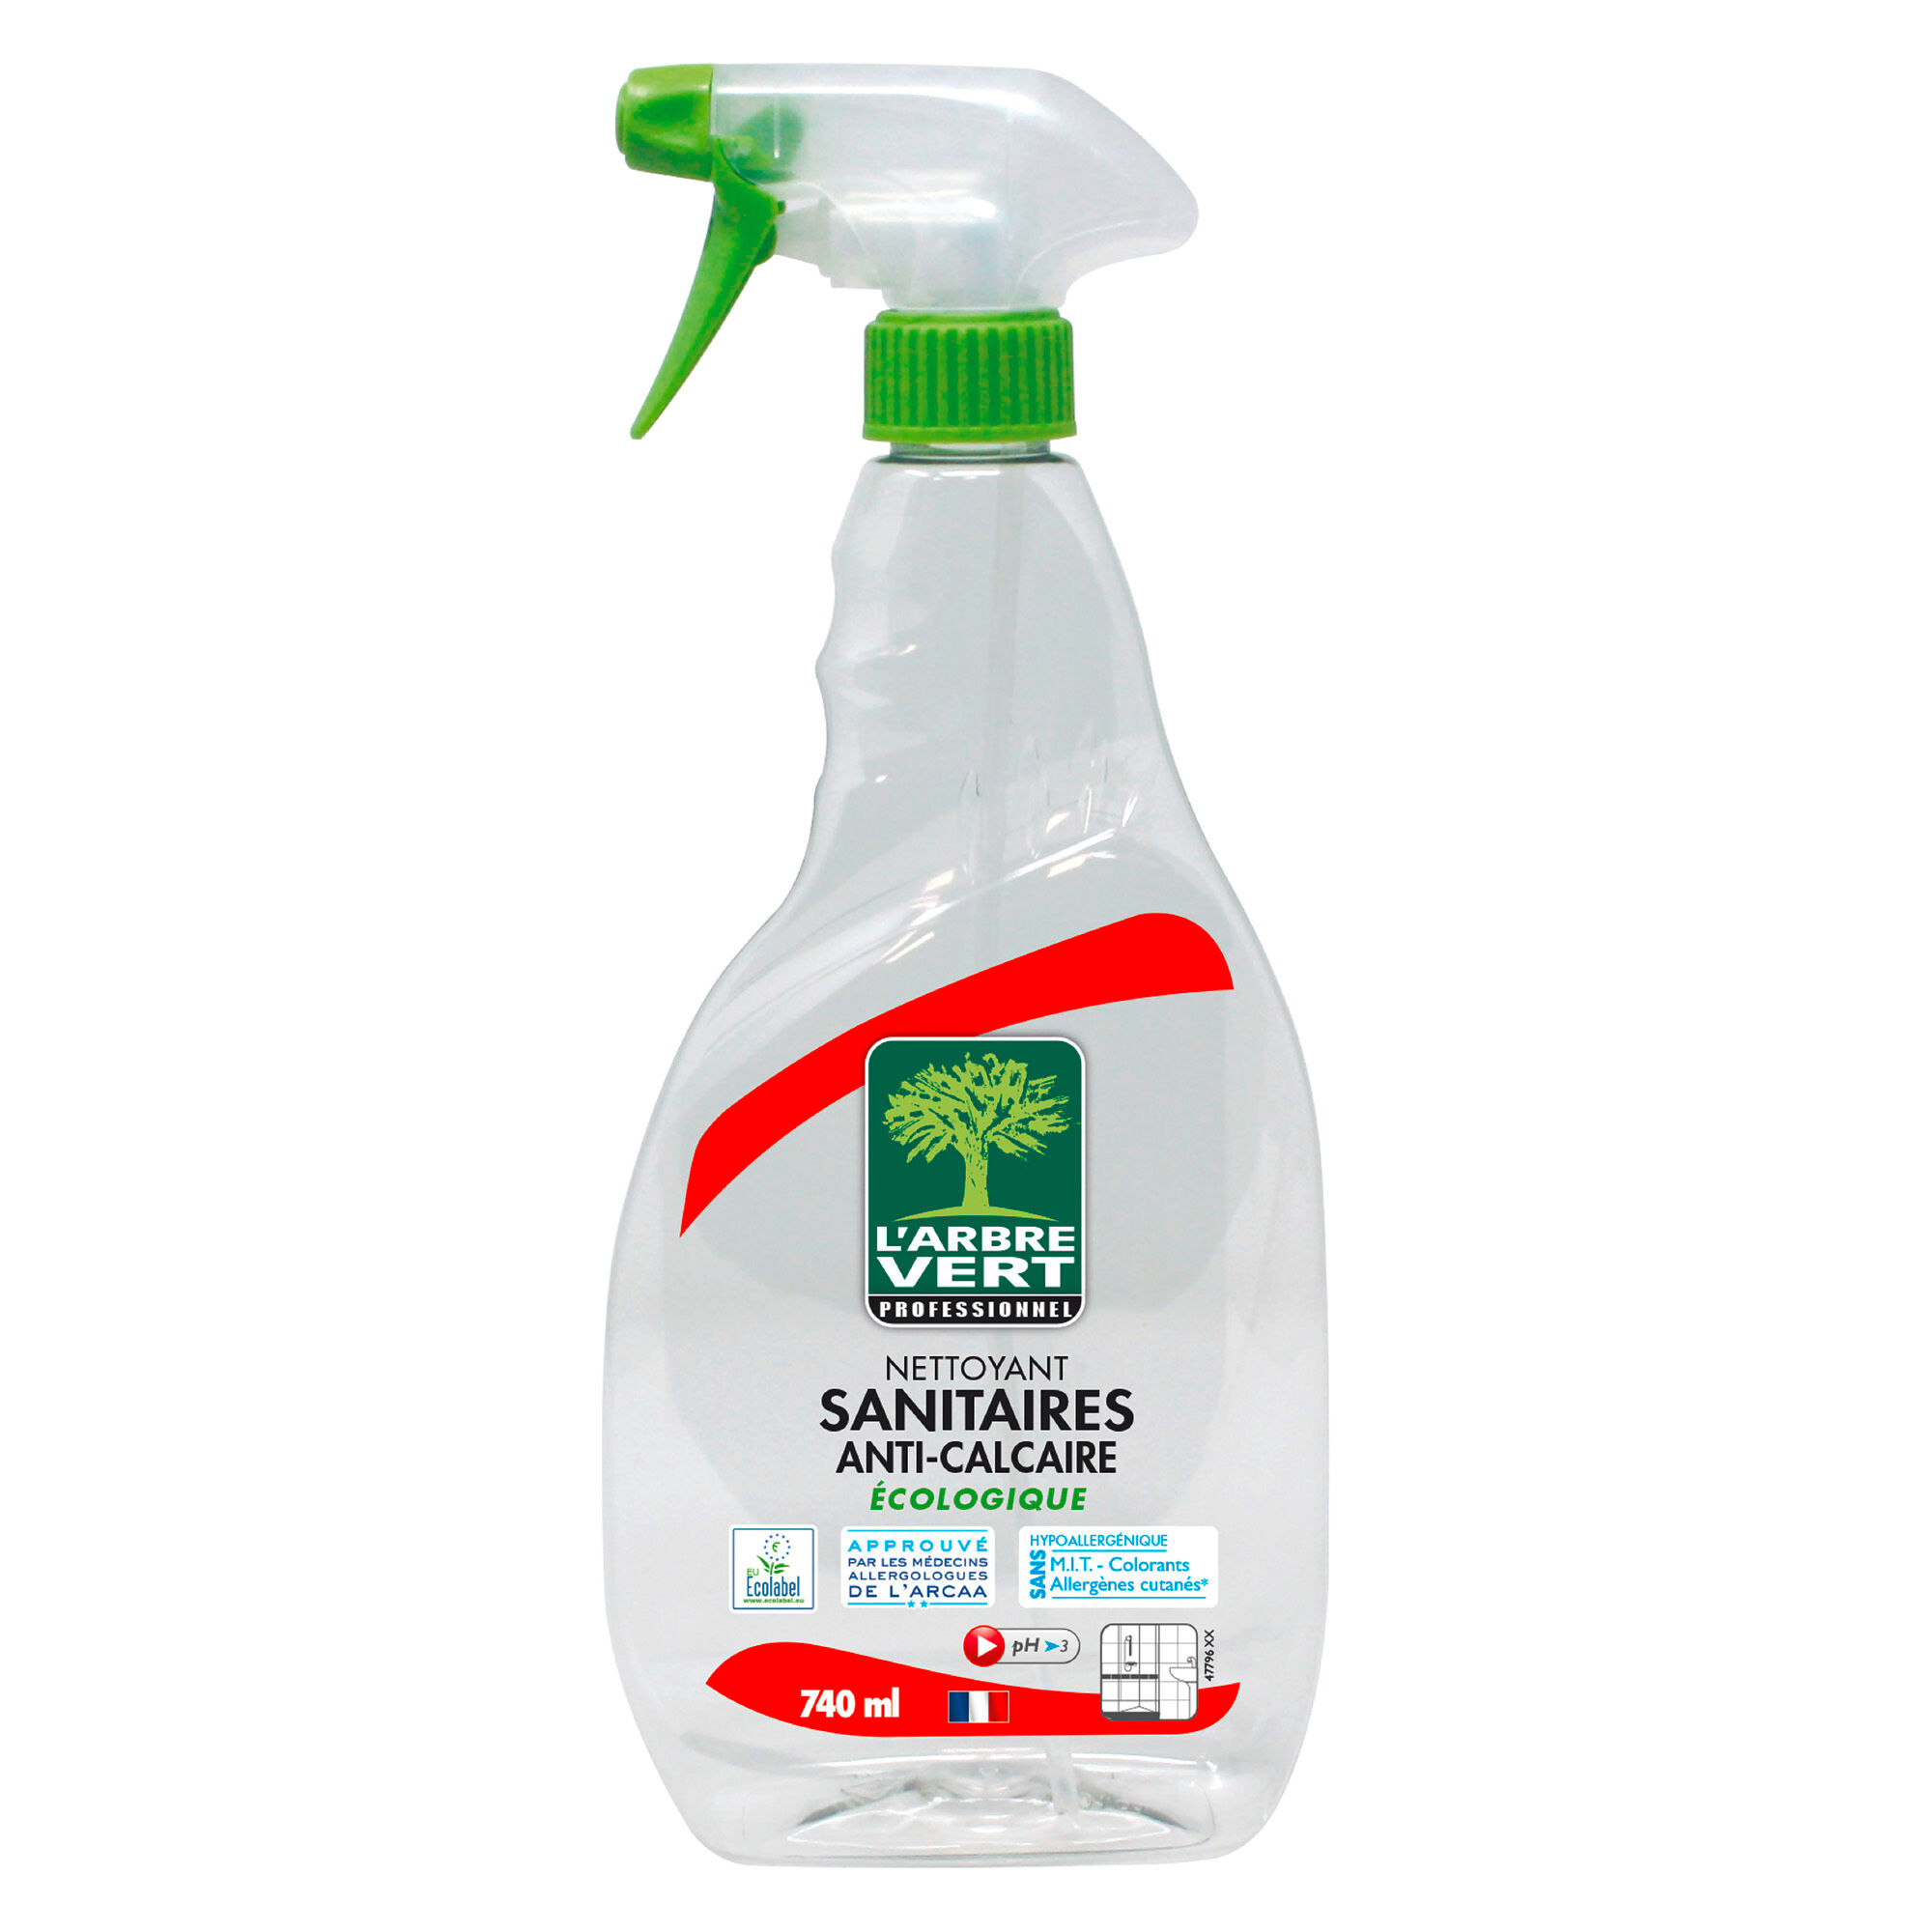 Arbre vert professionnel Nettoyant Anti-Calcaire Sanitaire LArbre Vert  Spray 740 ml